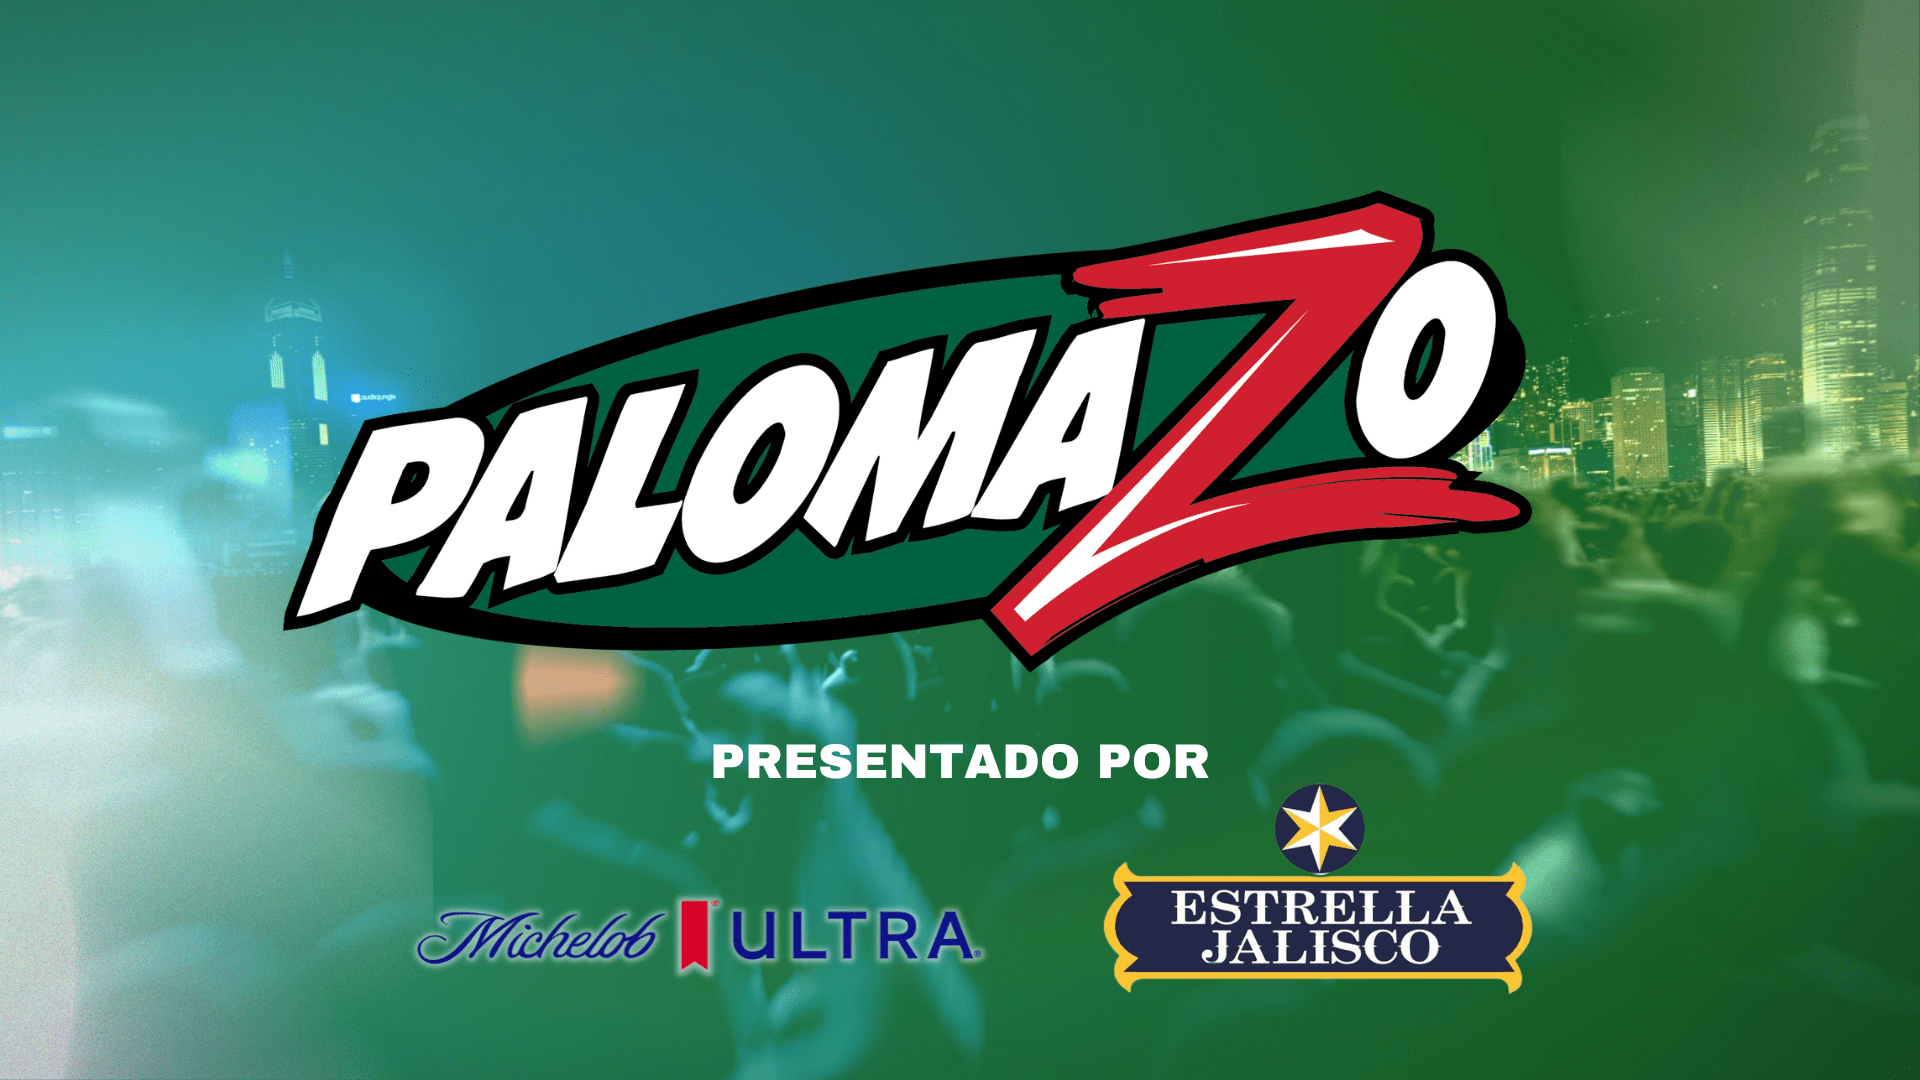 Palomazo logo con logo de michelob ultra y estrella jalisco en fondo verde